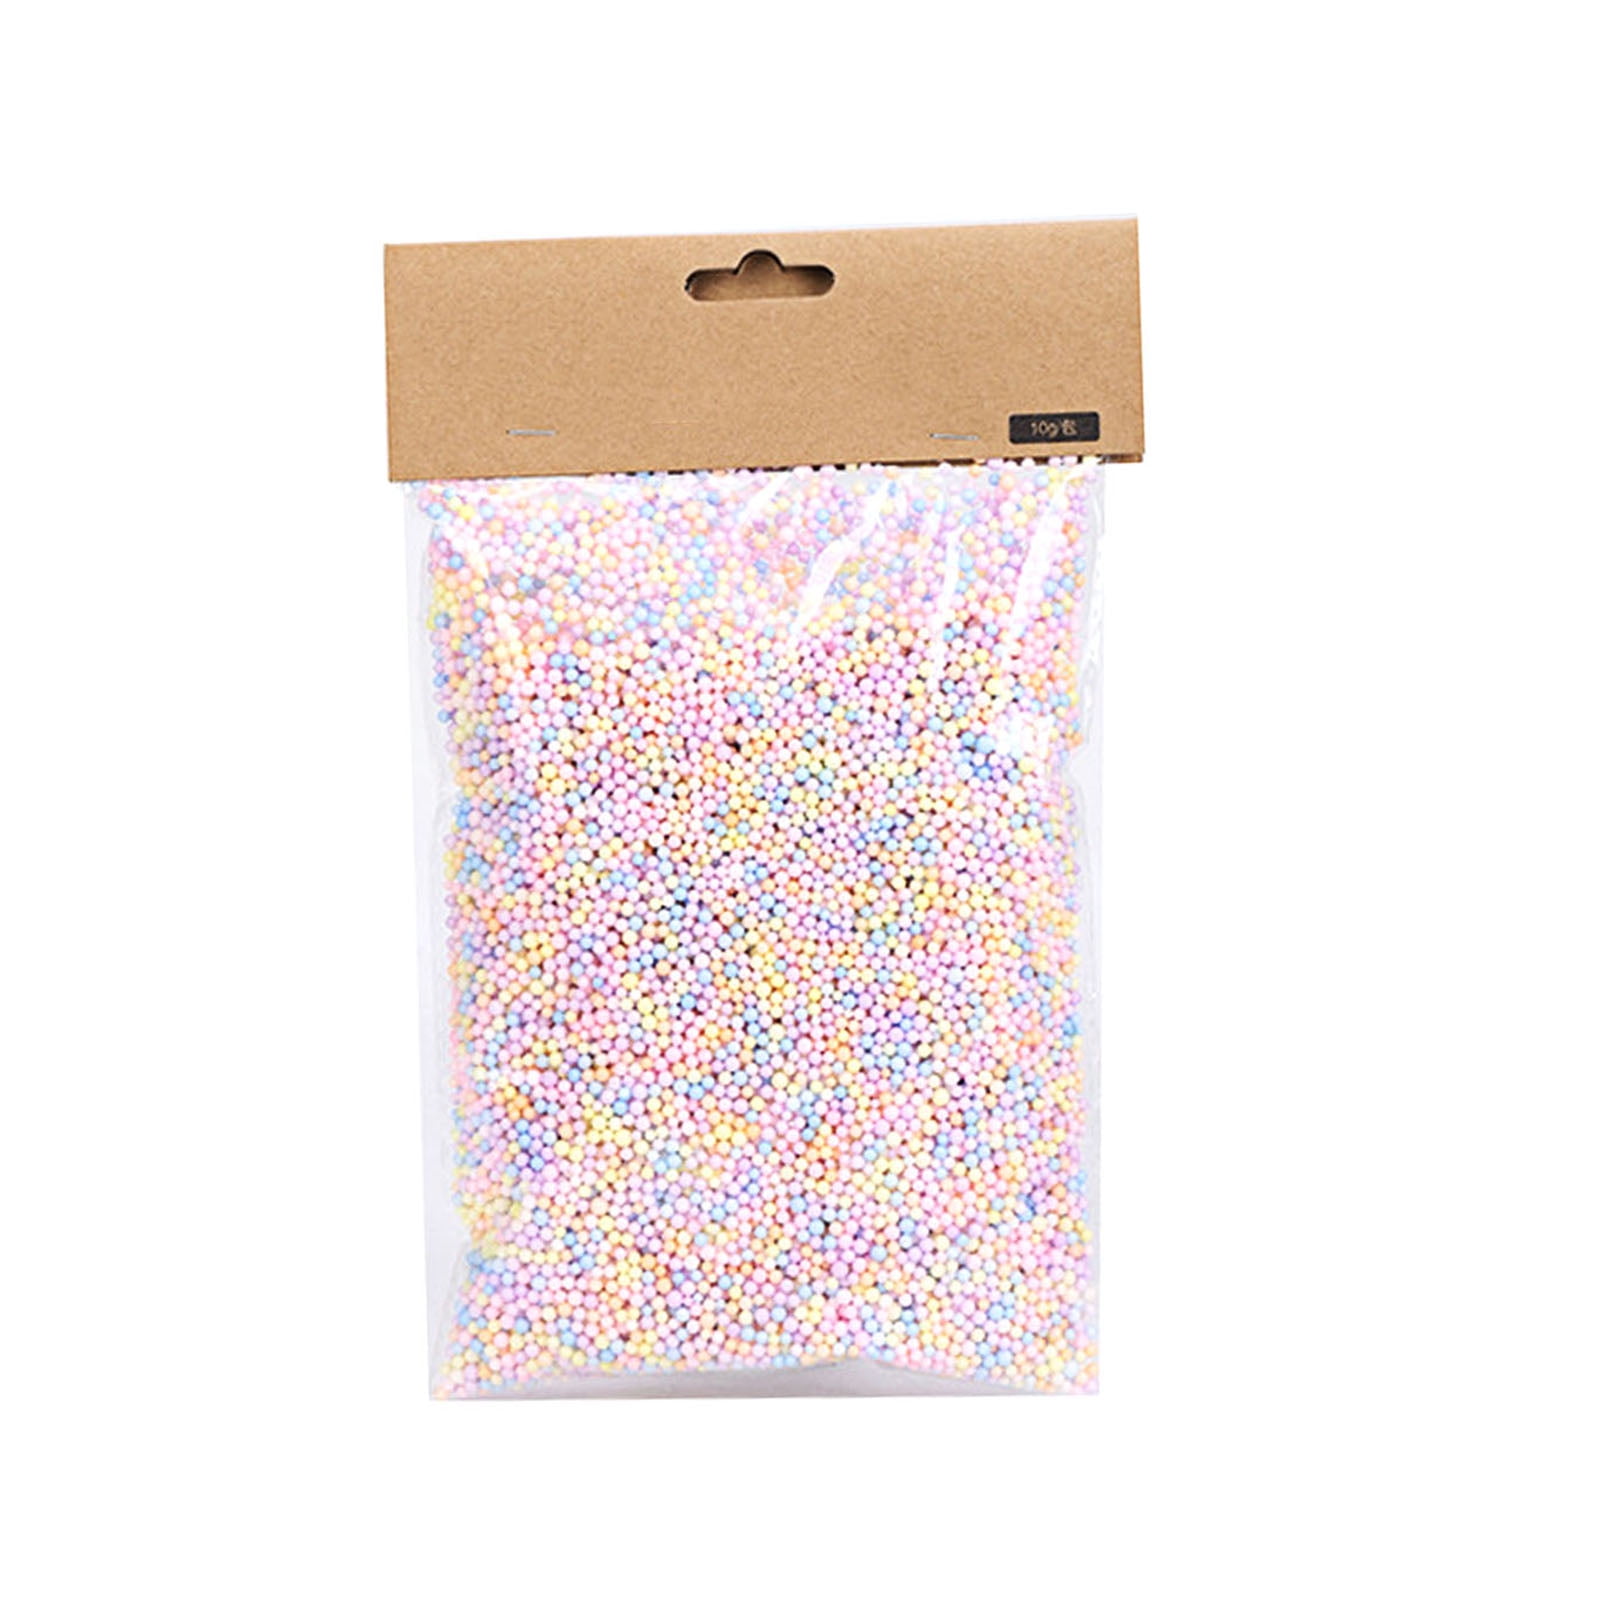 zjtoys colorful macarons foam beads polystyrene